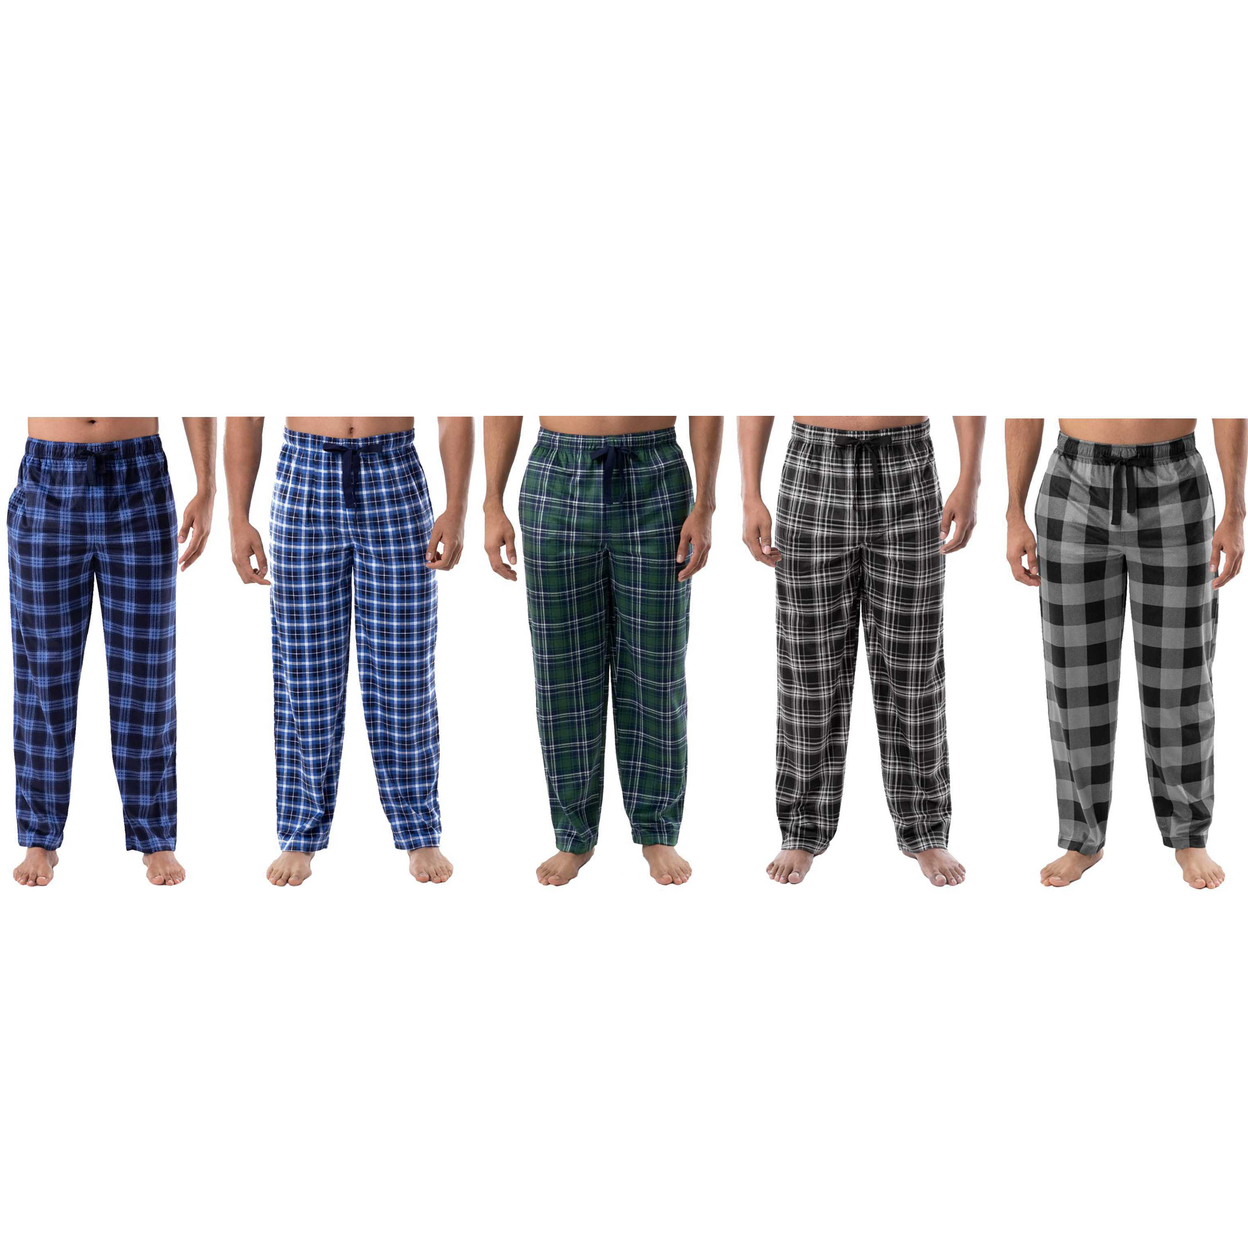 5-Pack: Men's Ultra-Soft Cozy Lounge Sleep Micro Fleece Plaid Pajama Pants - Large